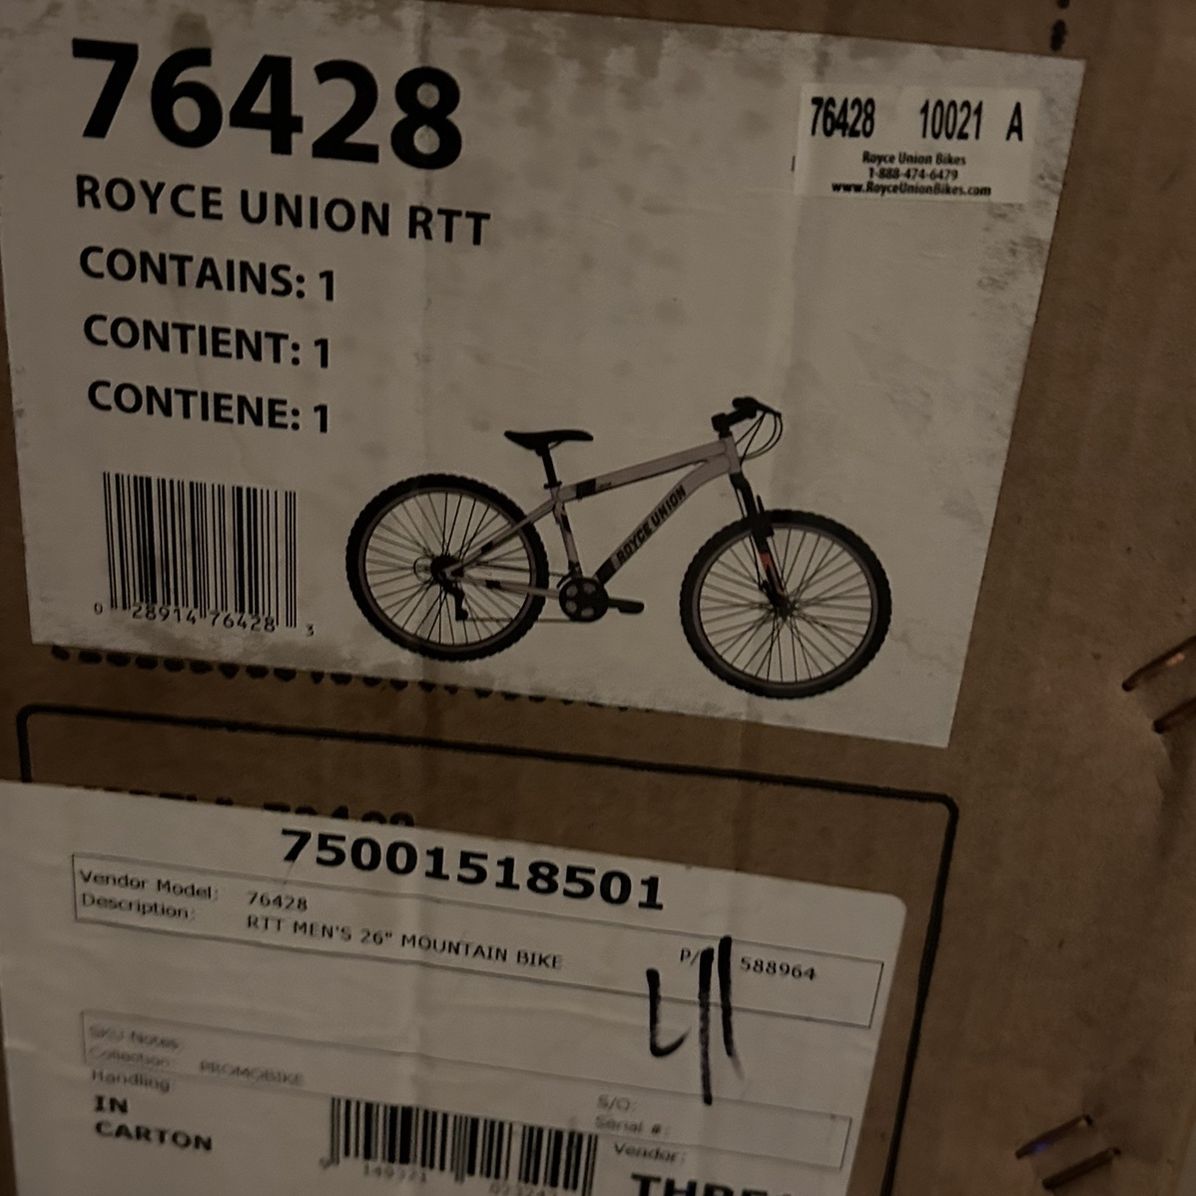 Royce Union RTT 26” Mountain bike